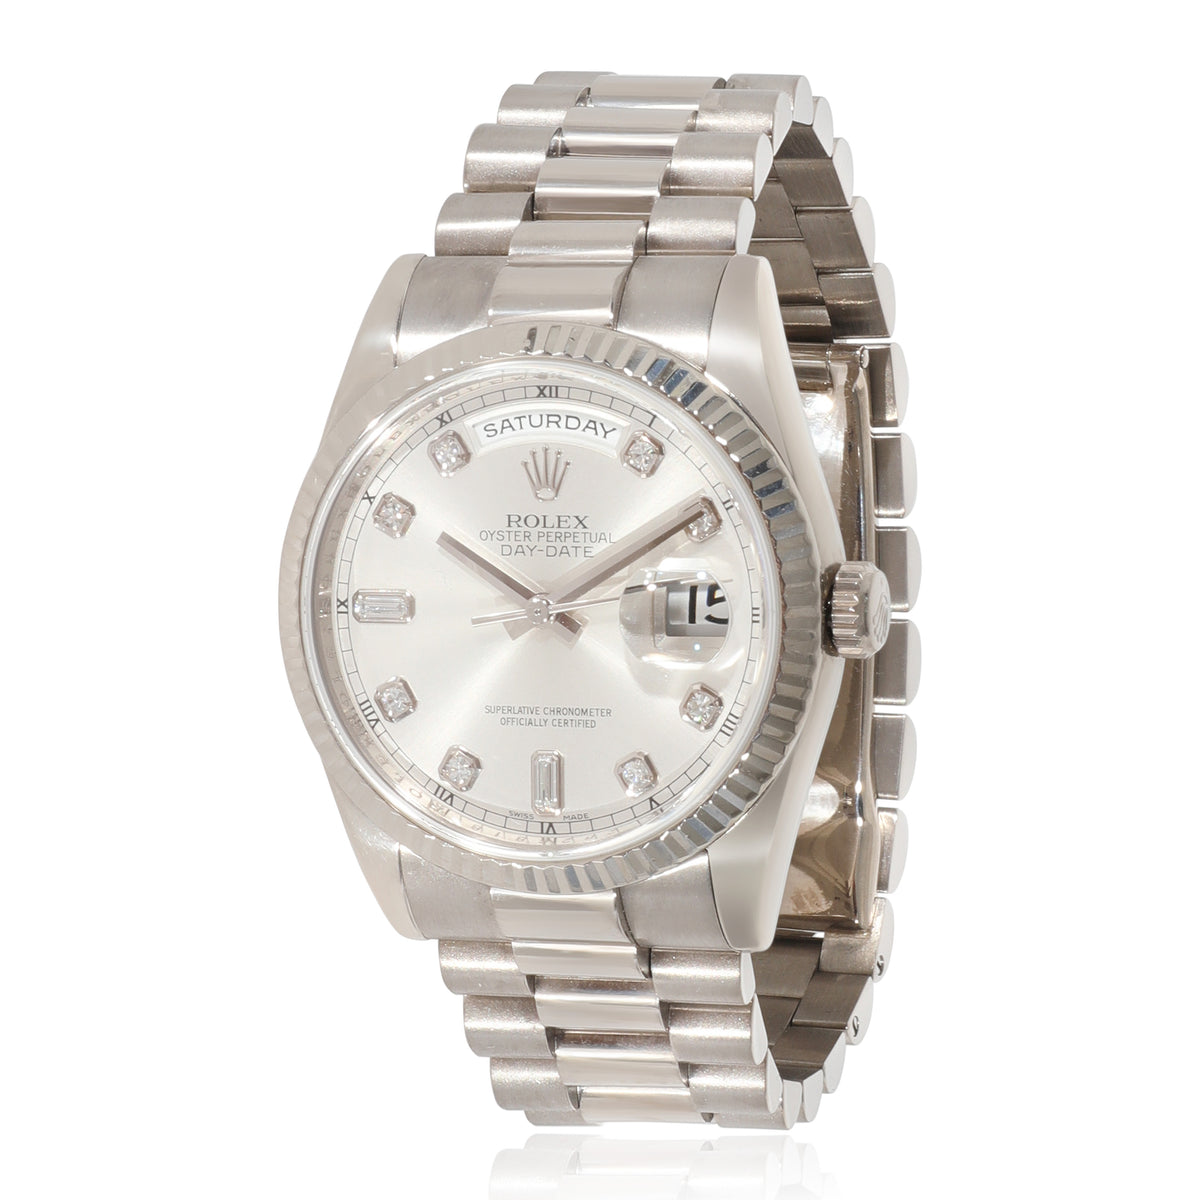 Rolex Day-Date 118239 Men's Watch in 18kt White Gold